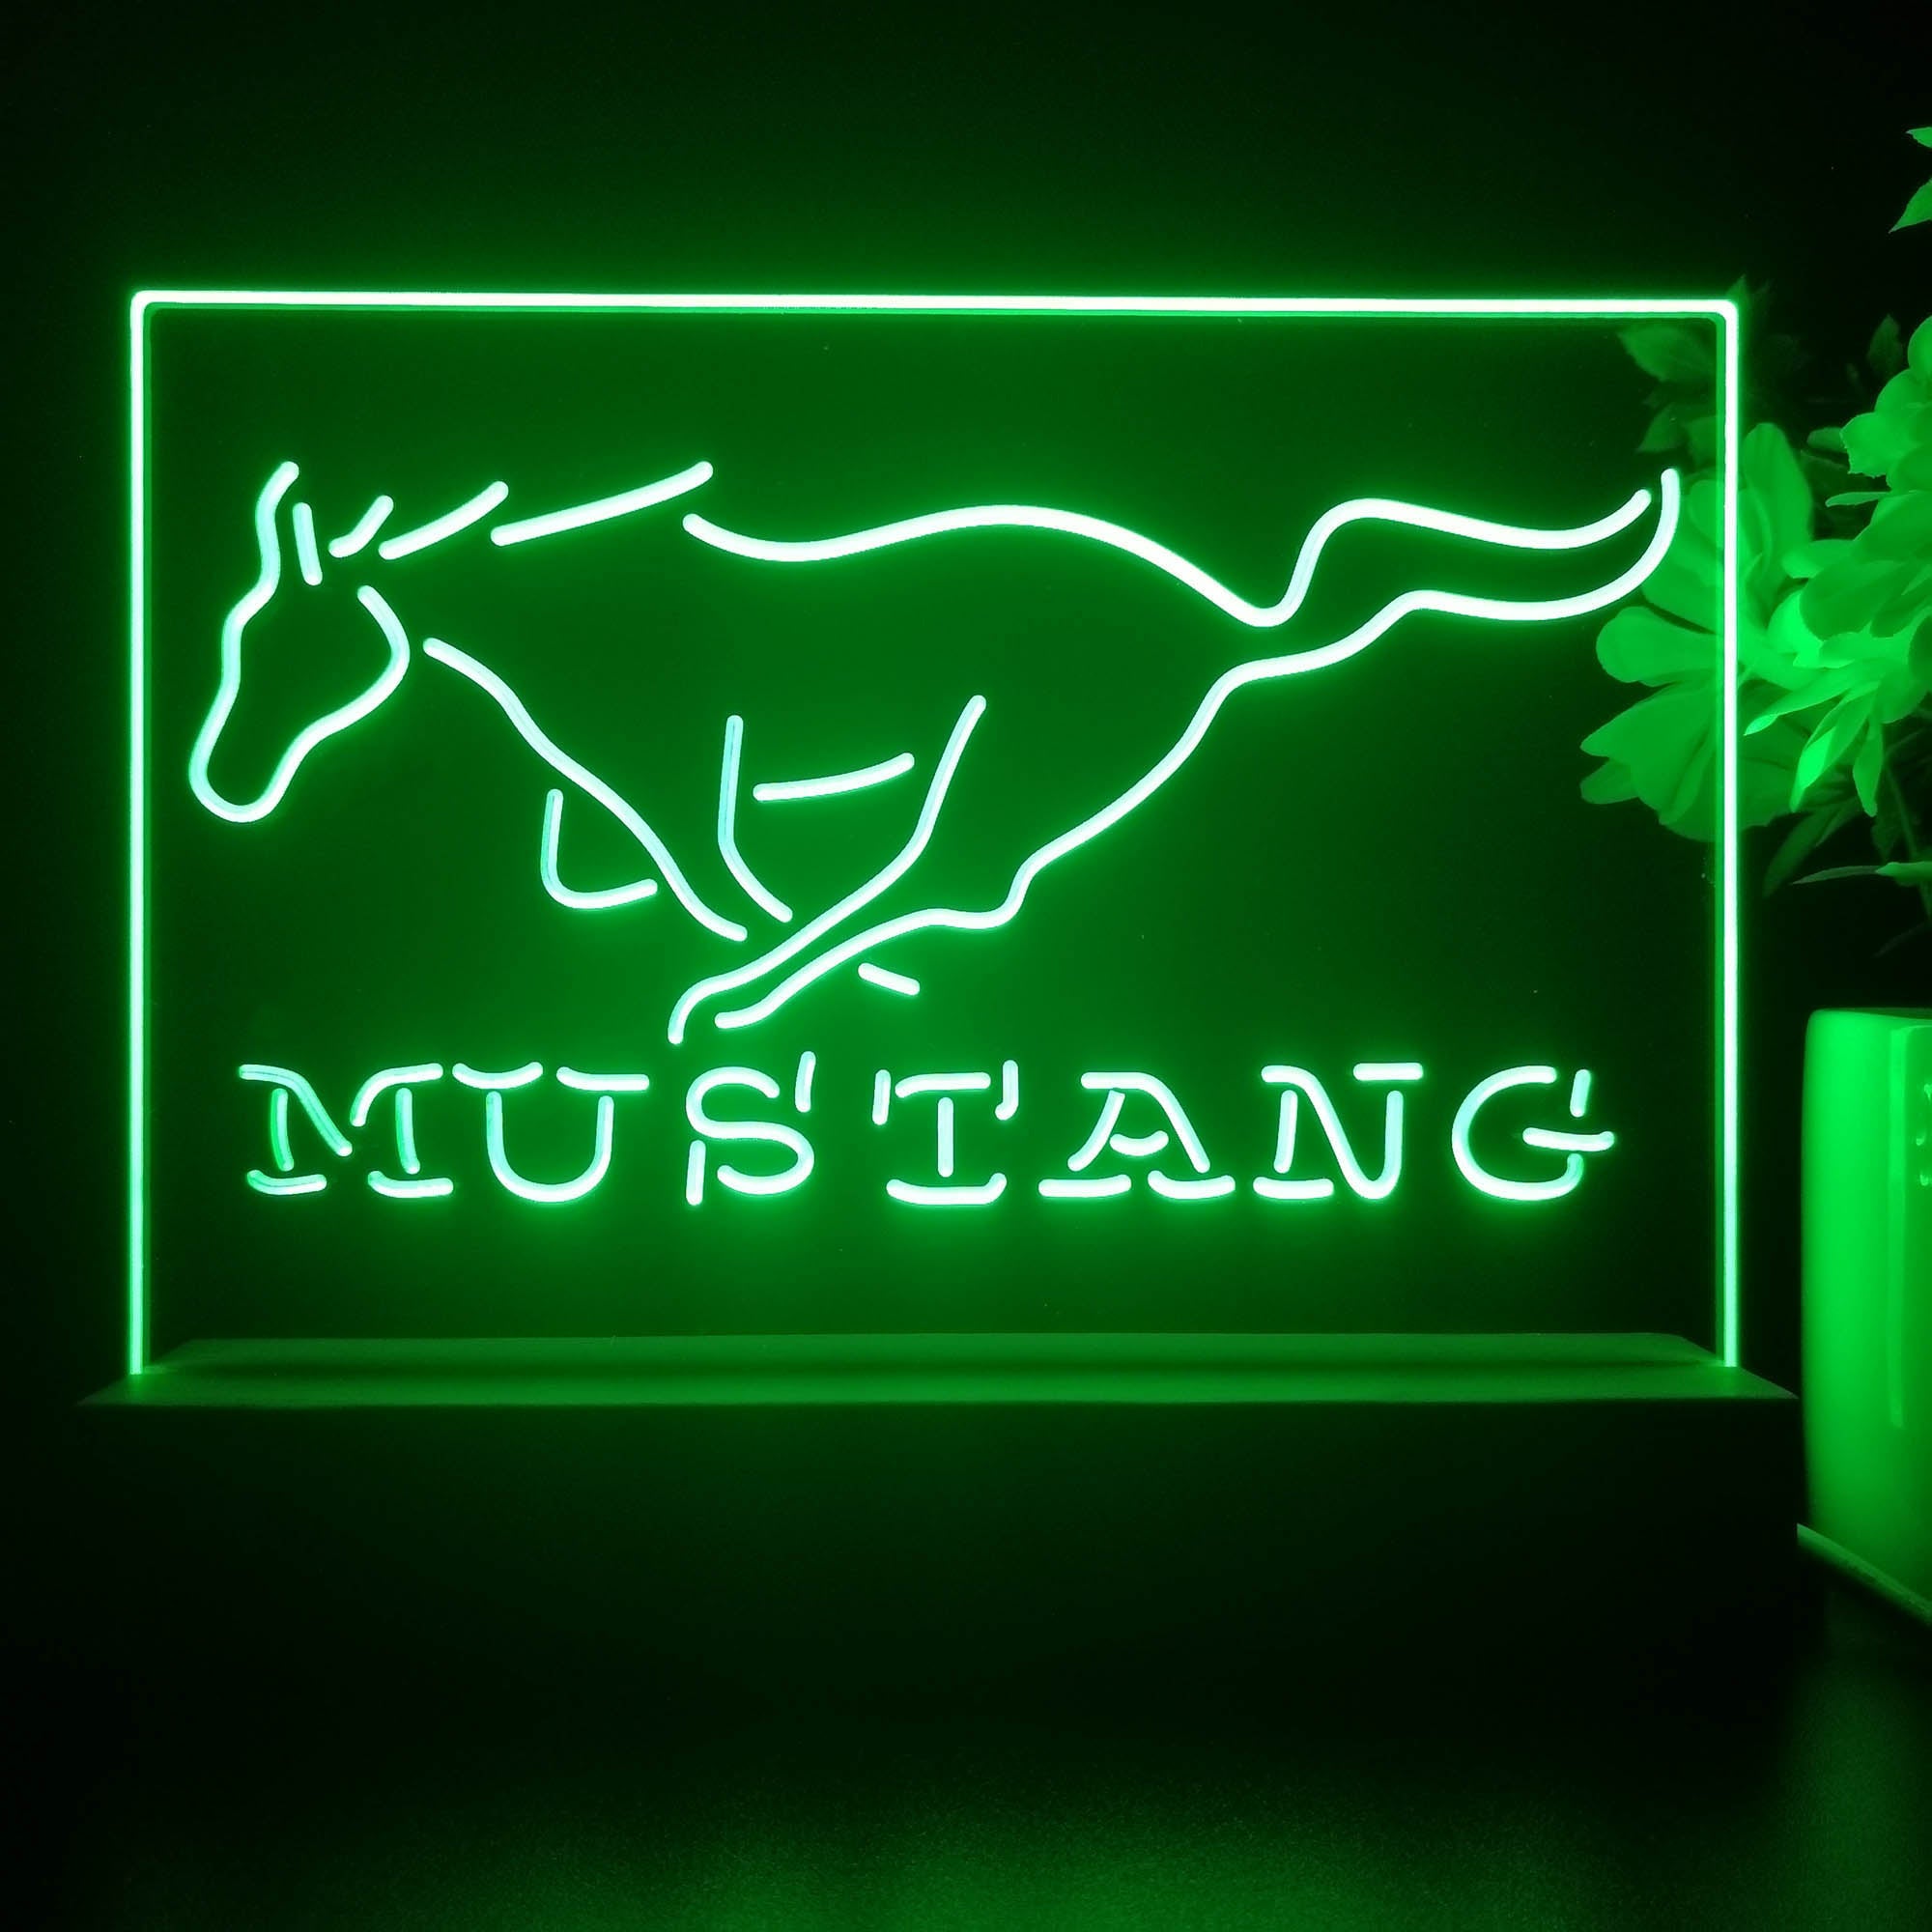 Mustang Ford 3D Illusion Night Light Desk Lamp